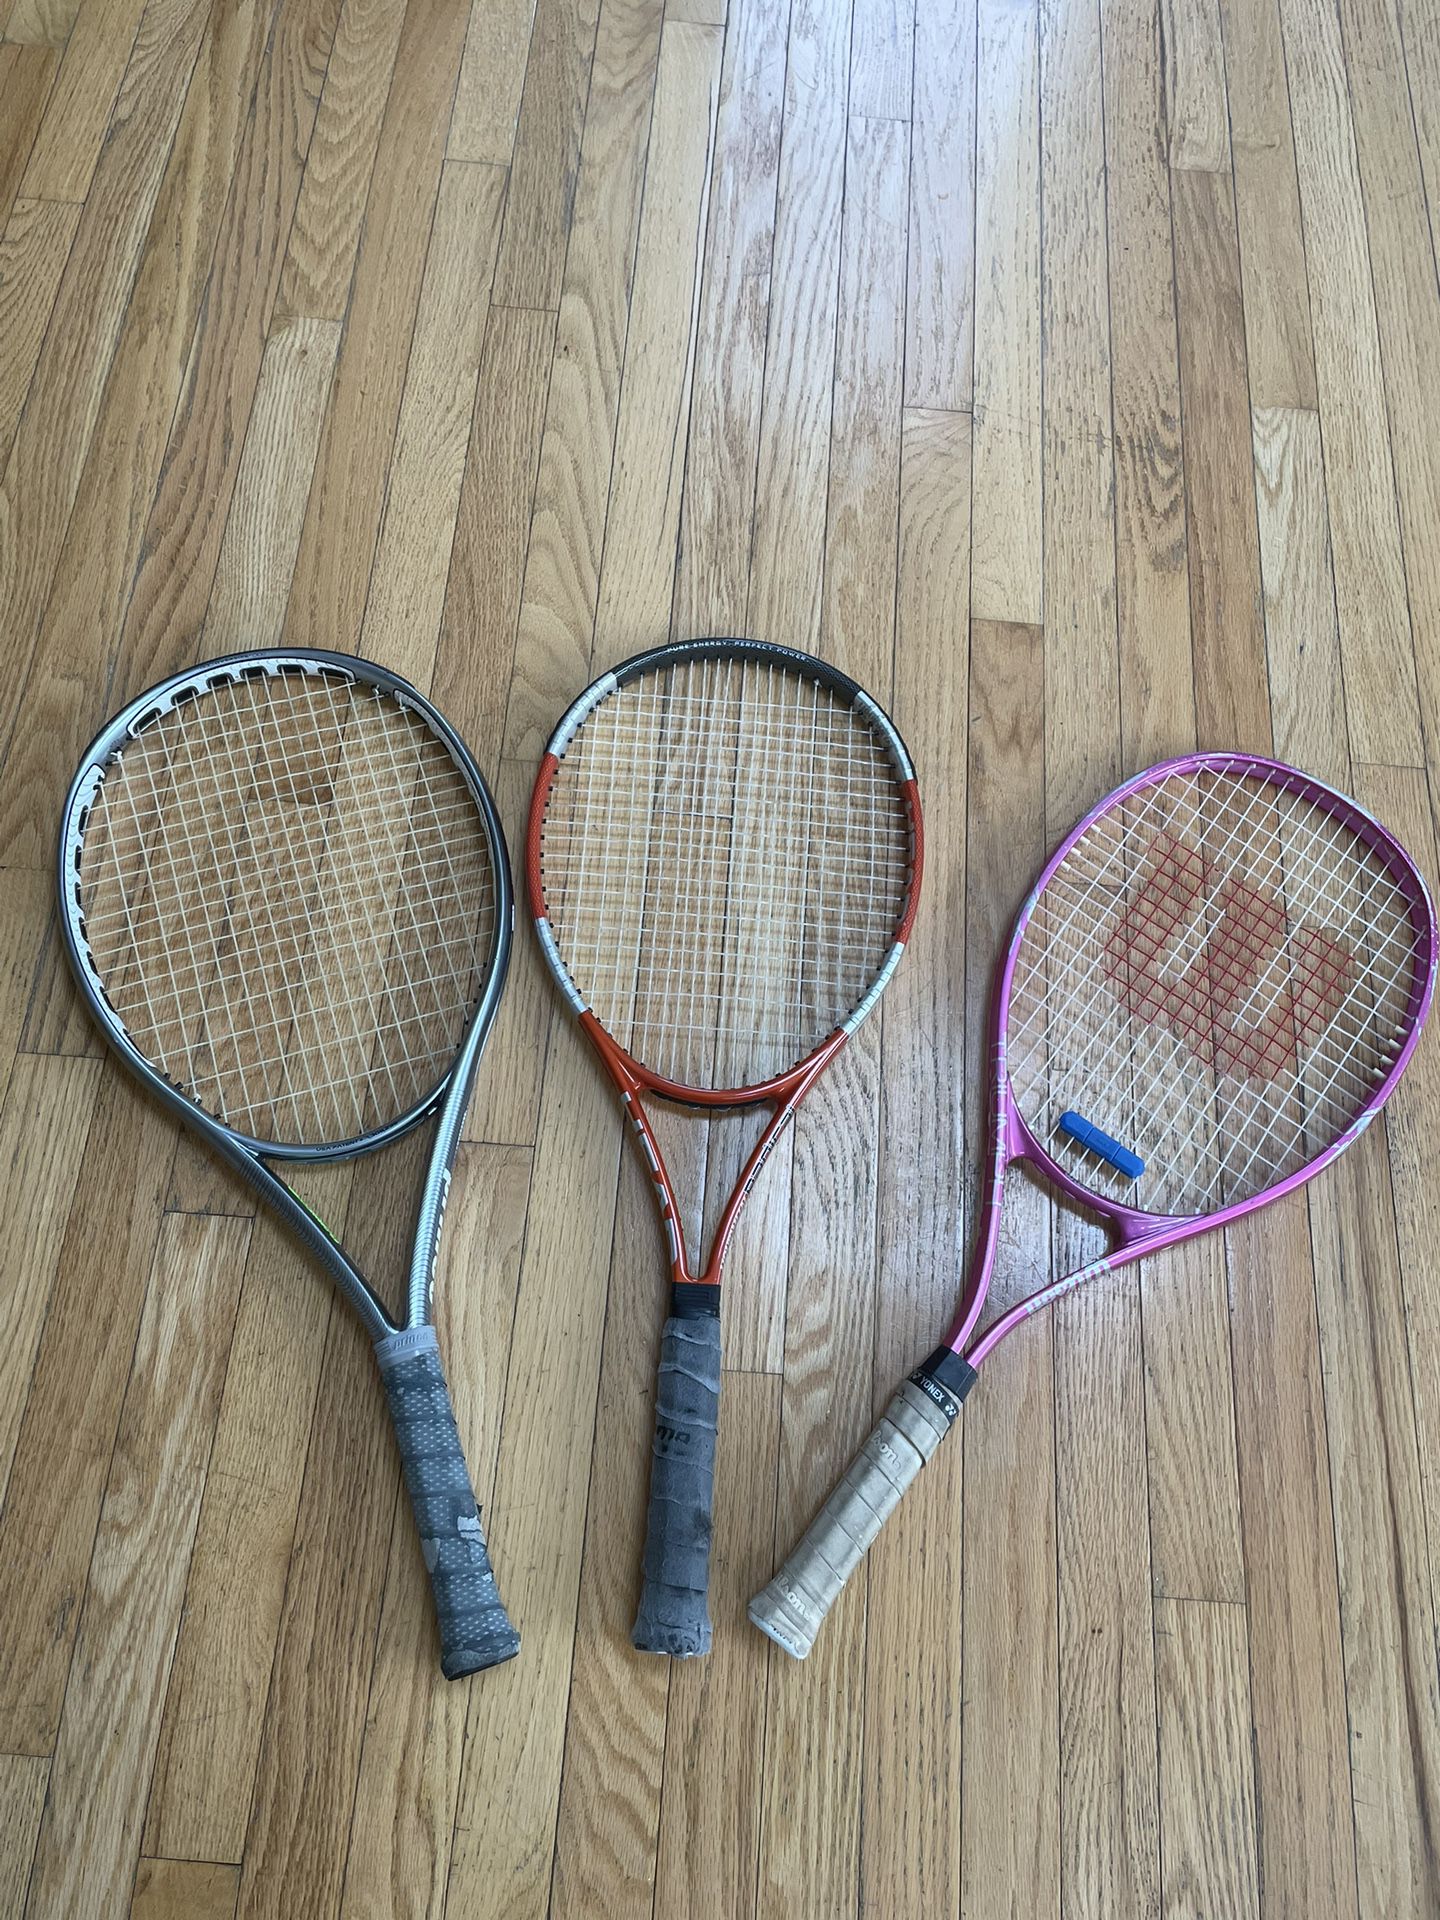 Tennis Rakets